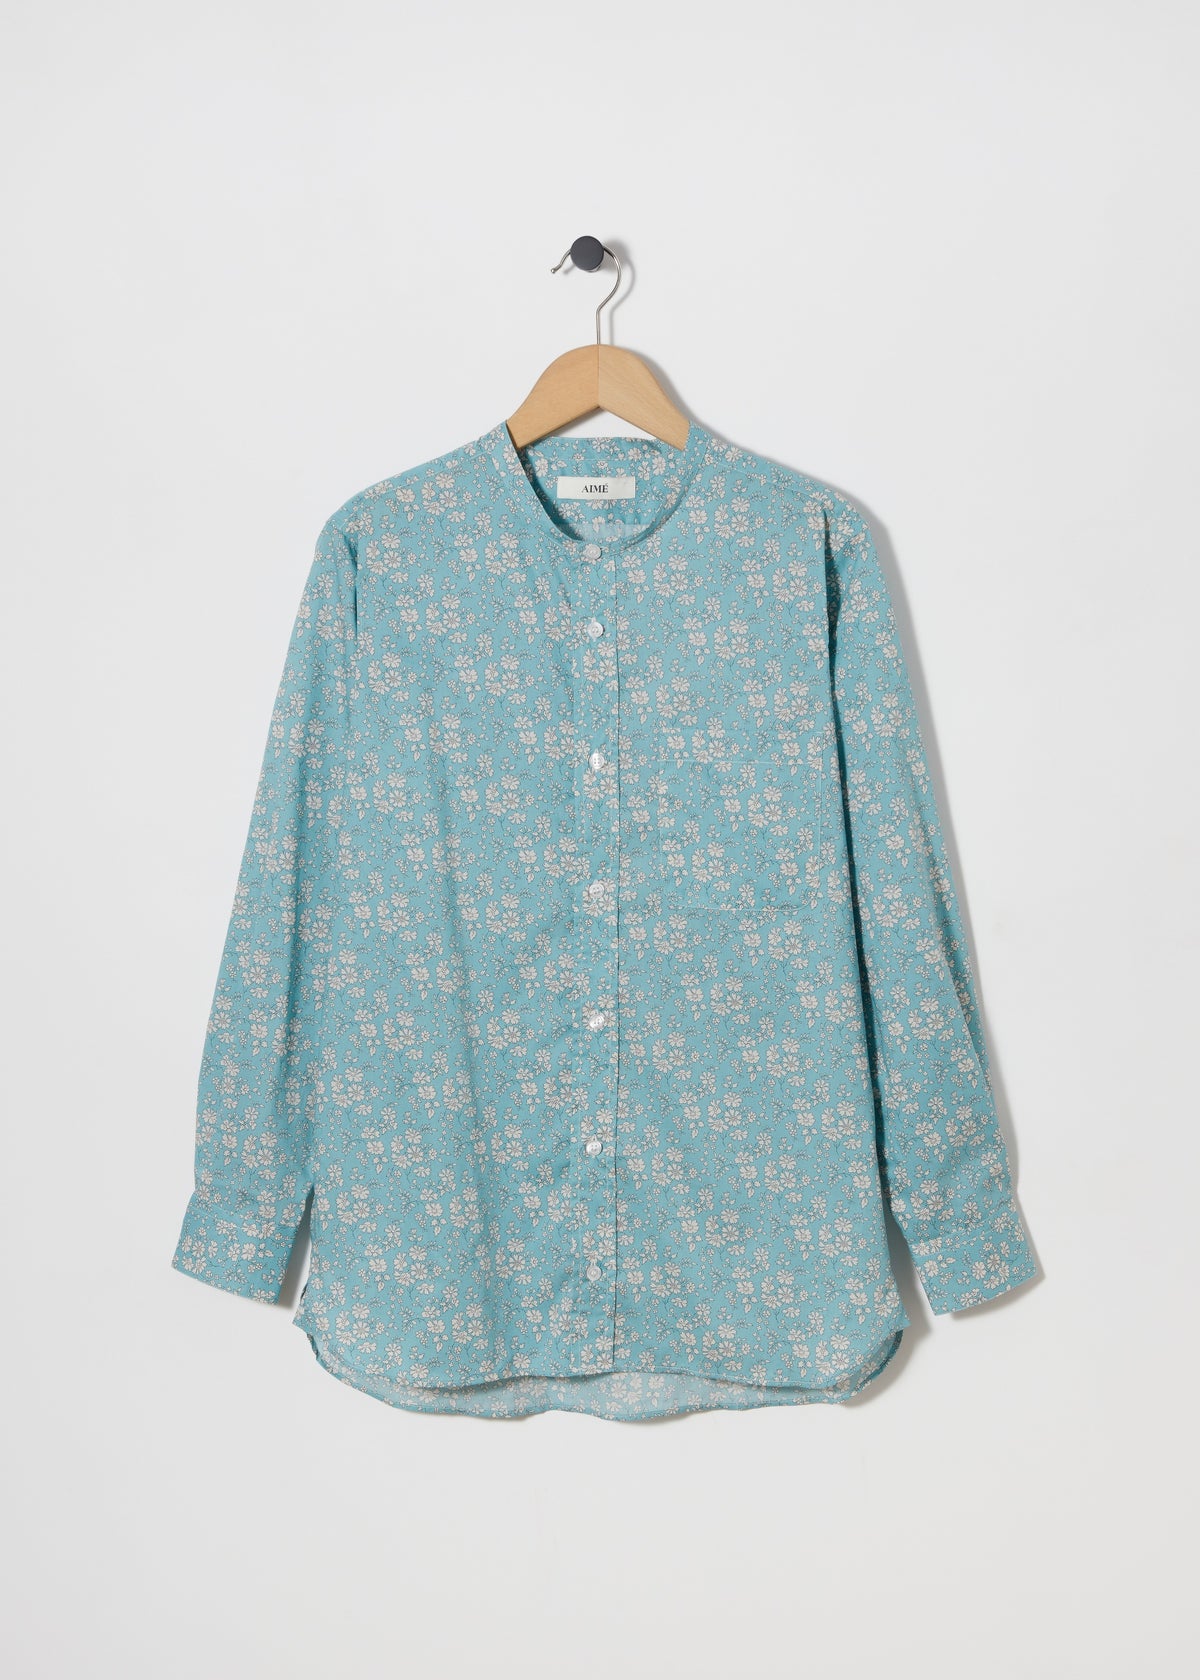 Aimé Shirt — Made with Capel Aqua Tana Lawn™